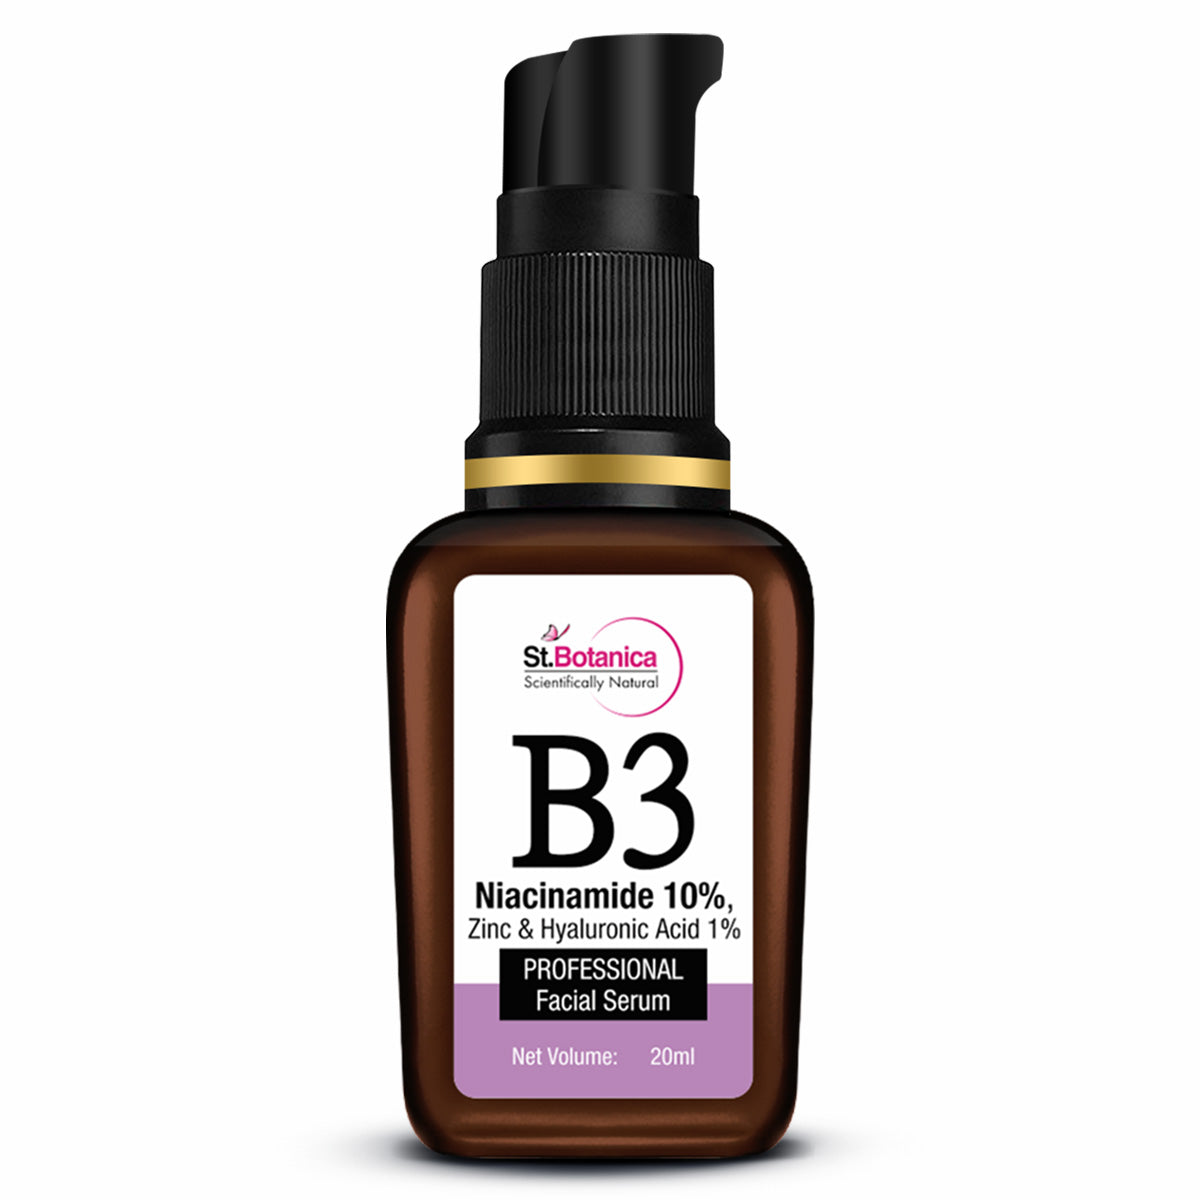 St.Botanica B3 Niacinamide 10%, Zinc & Hyaluronic Acid 1% Professional Face Serum, 20 ml